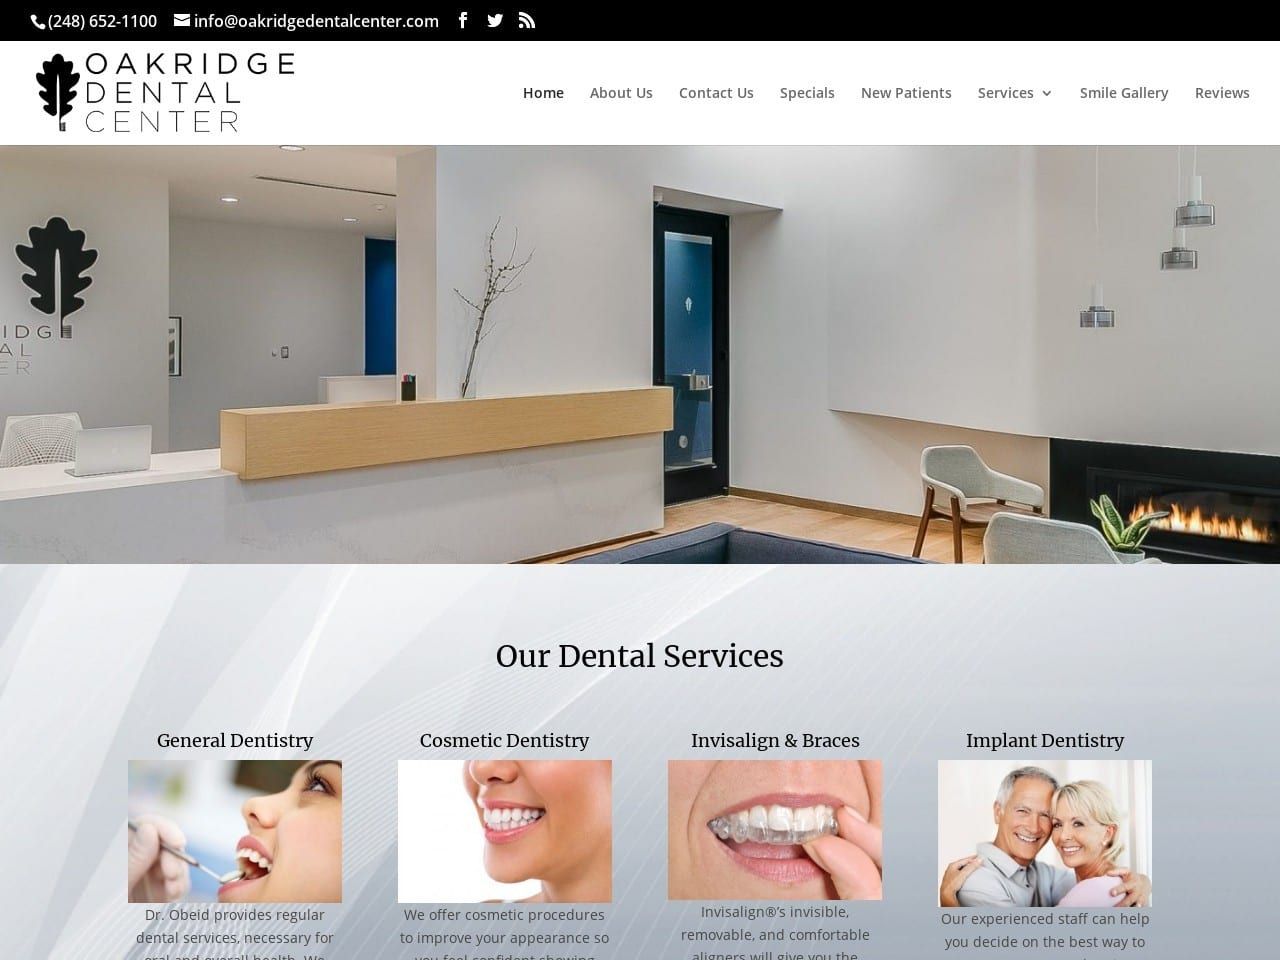 Oakridge Dental Center Website Screenshot from oakridgedentalcenter.com